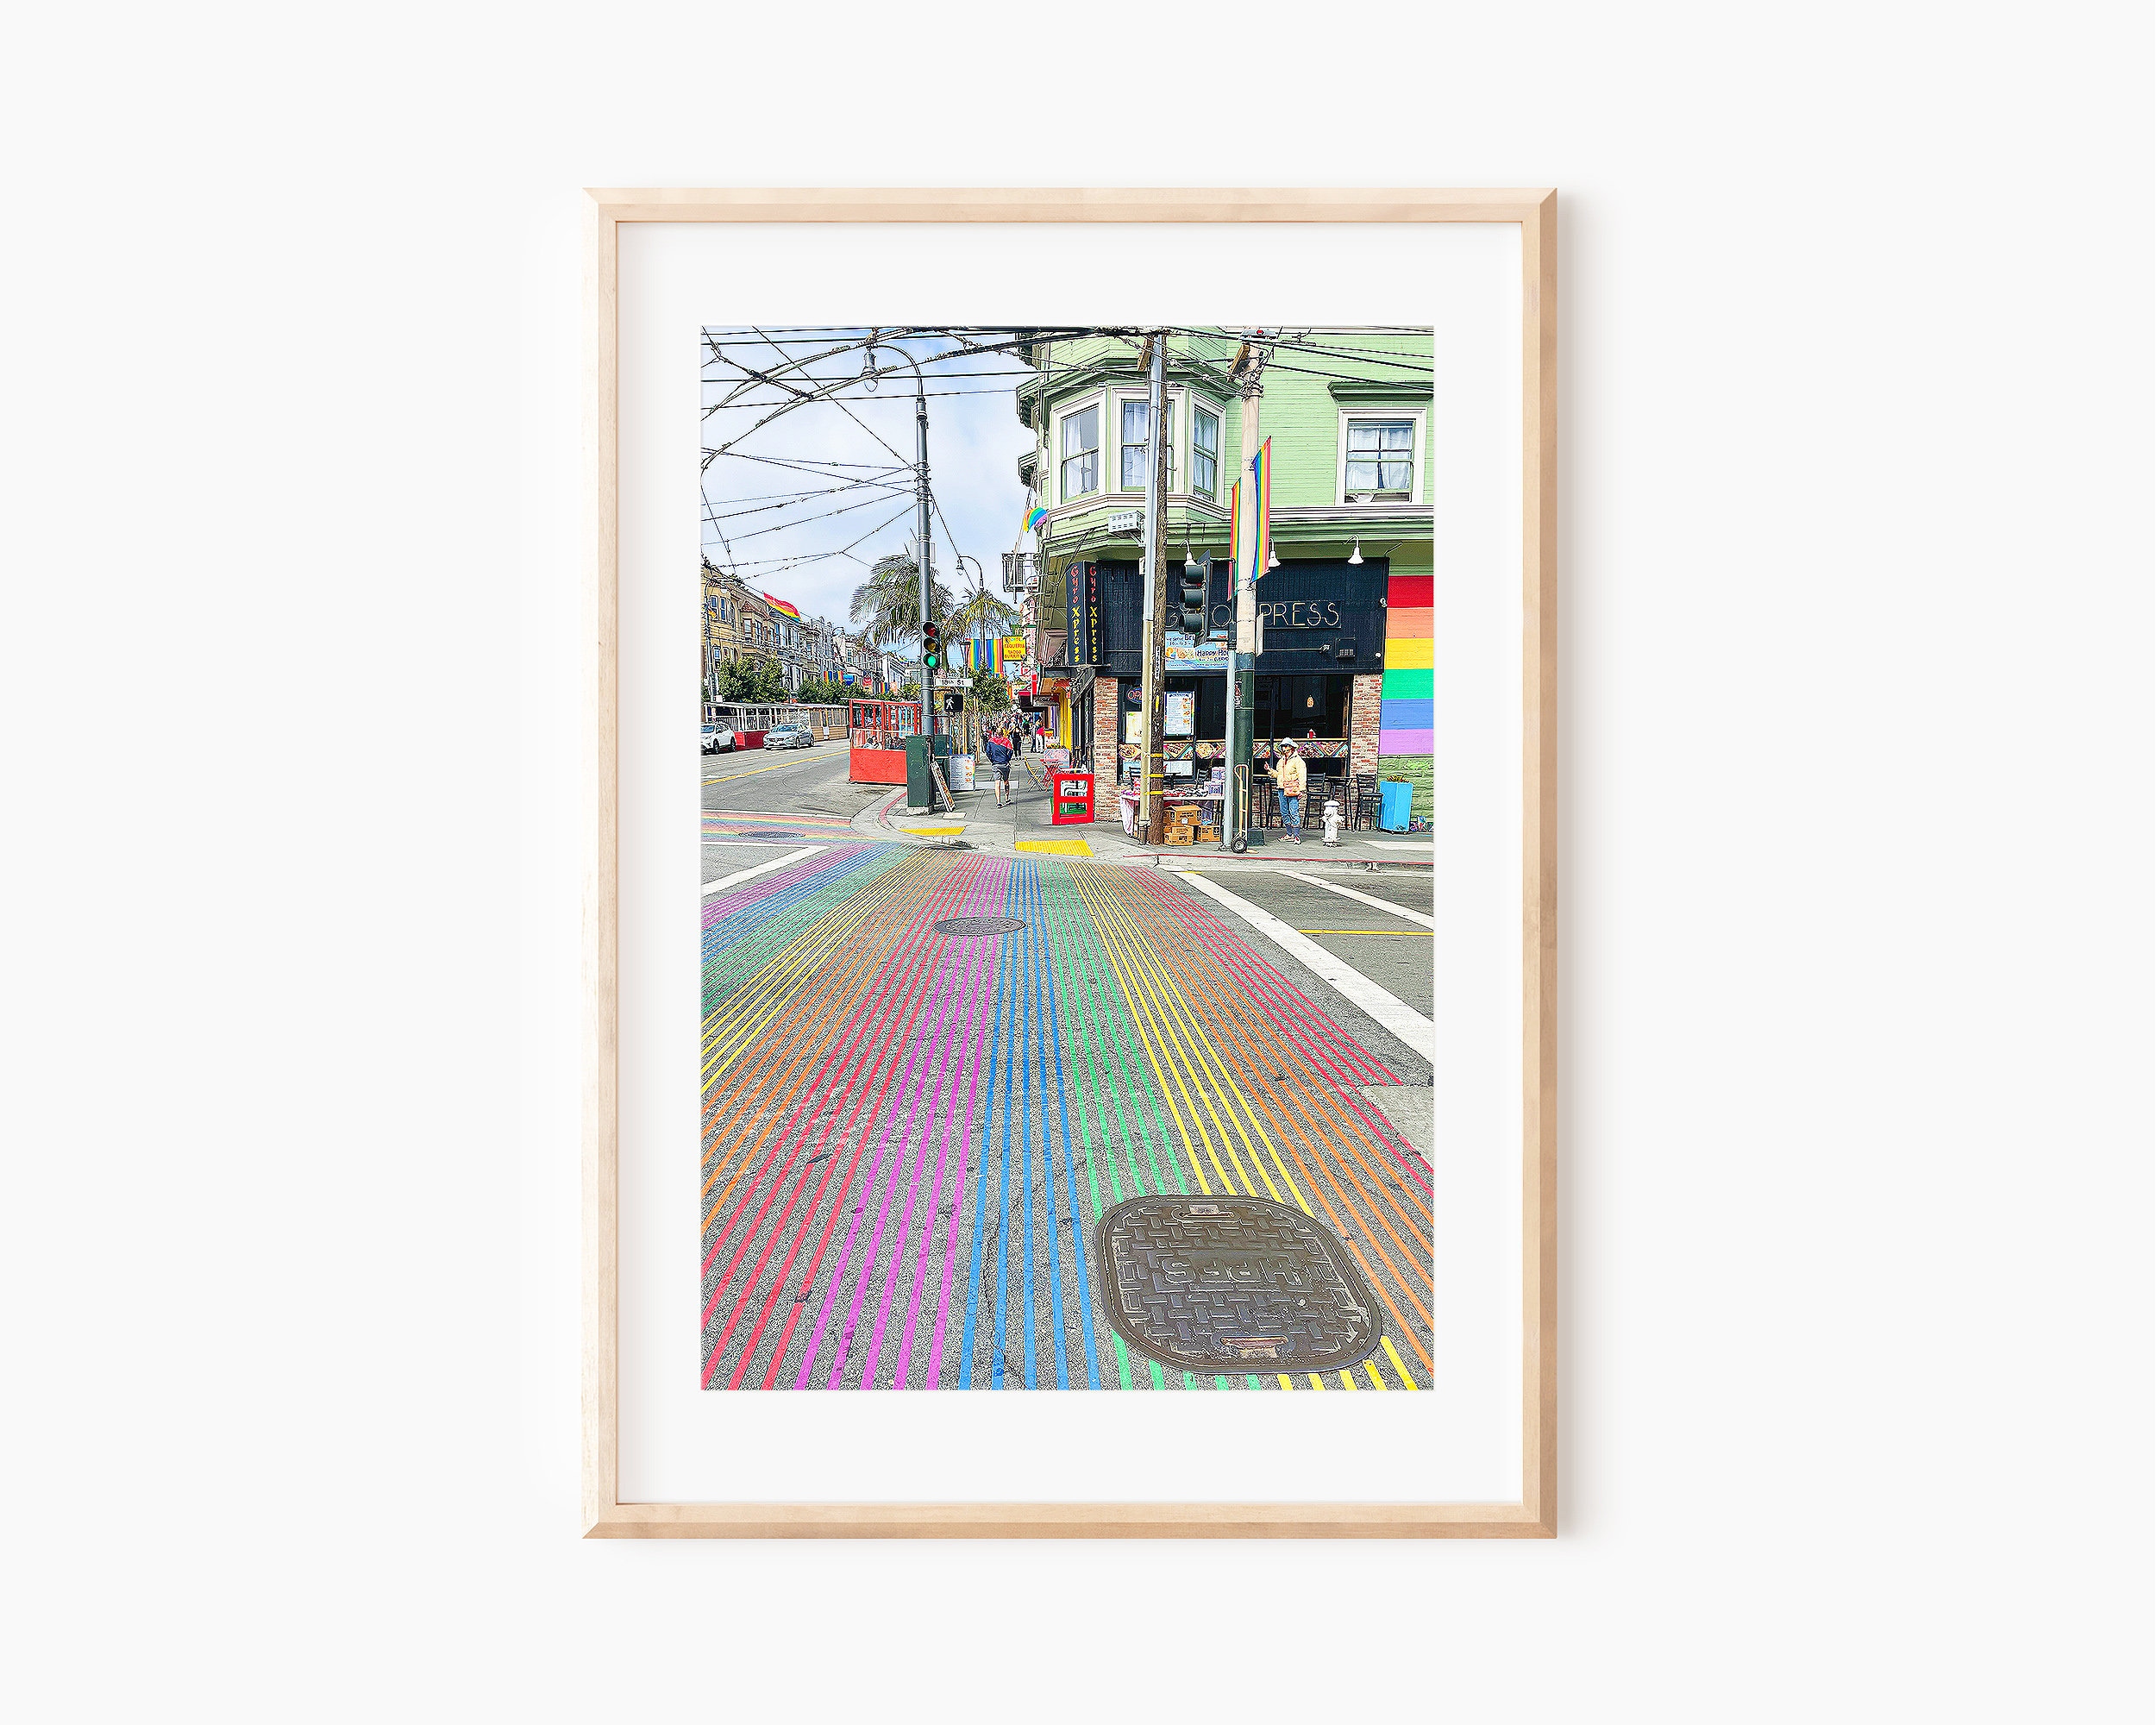 Castro District, San Francisco Photography, Castro Street, Rainbow